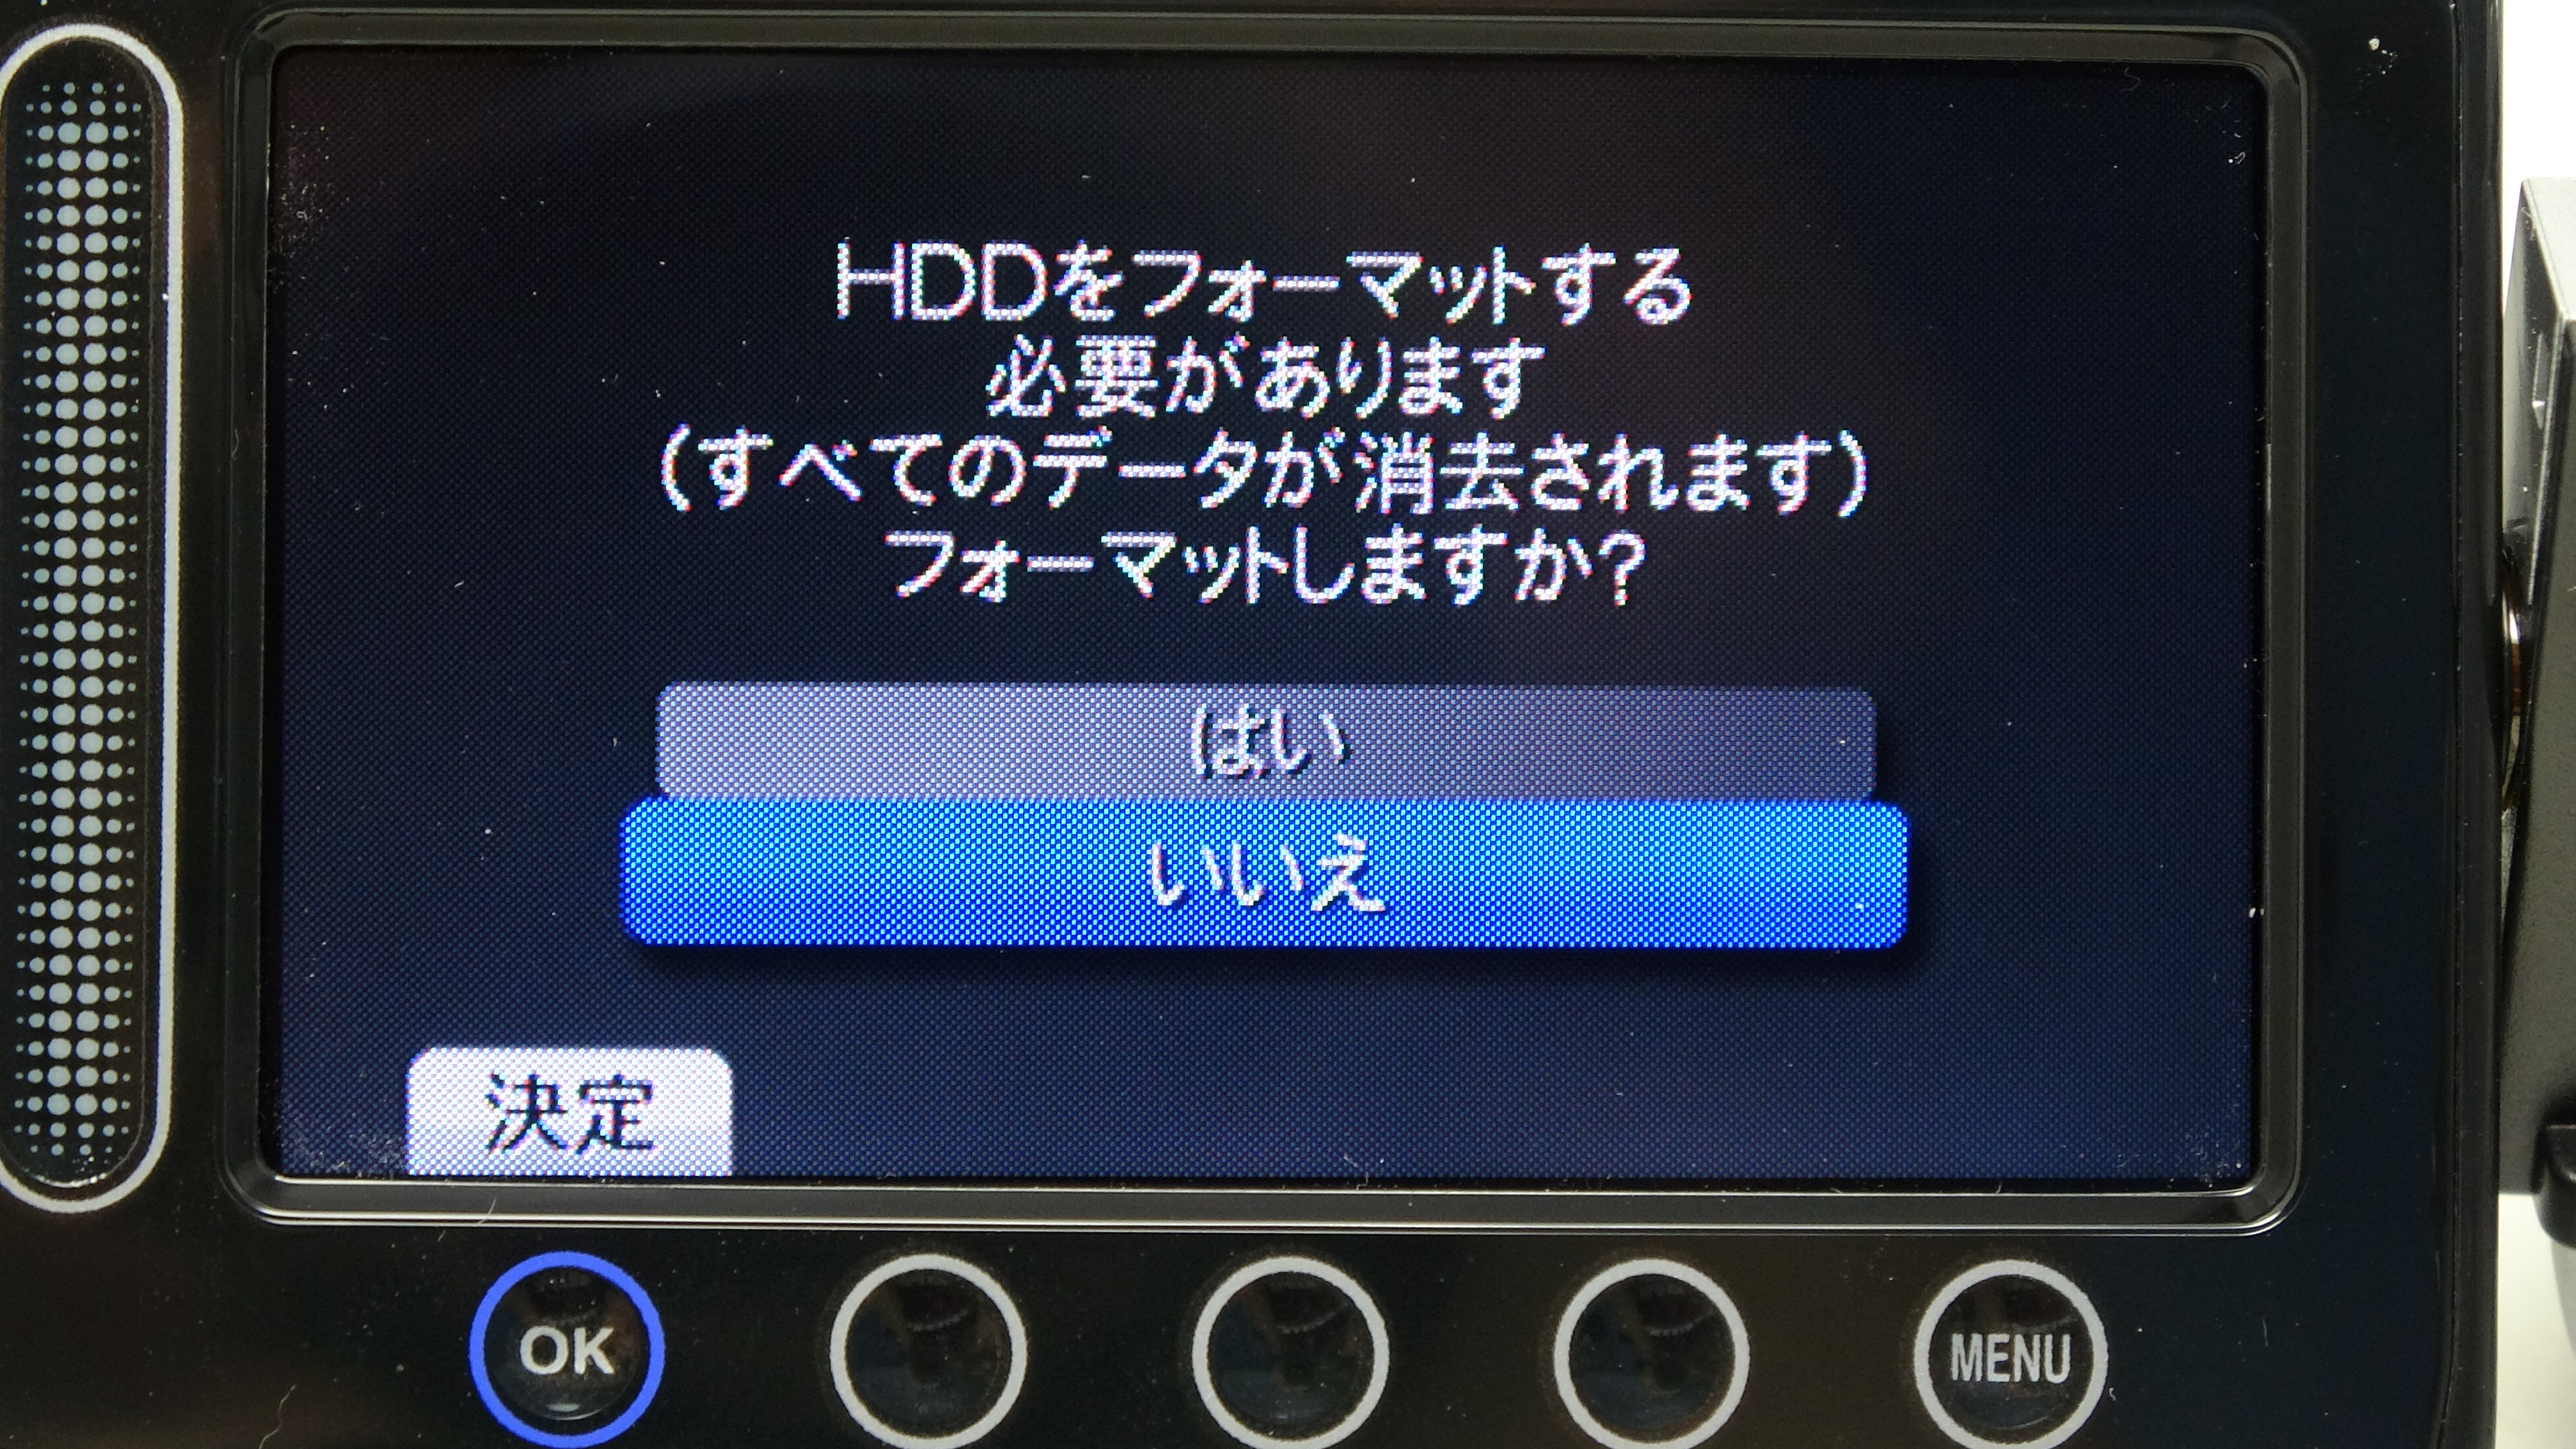 GZ-HD500-JVC HDDをフォーマットする必要がありますから復旧